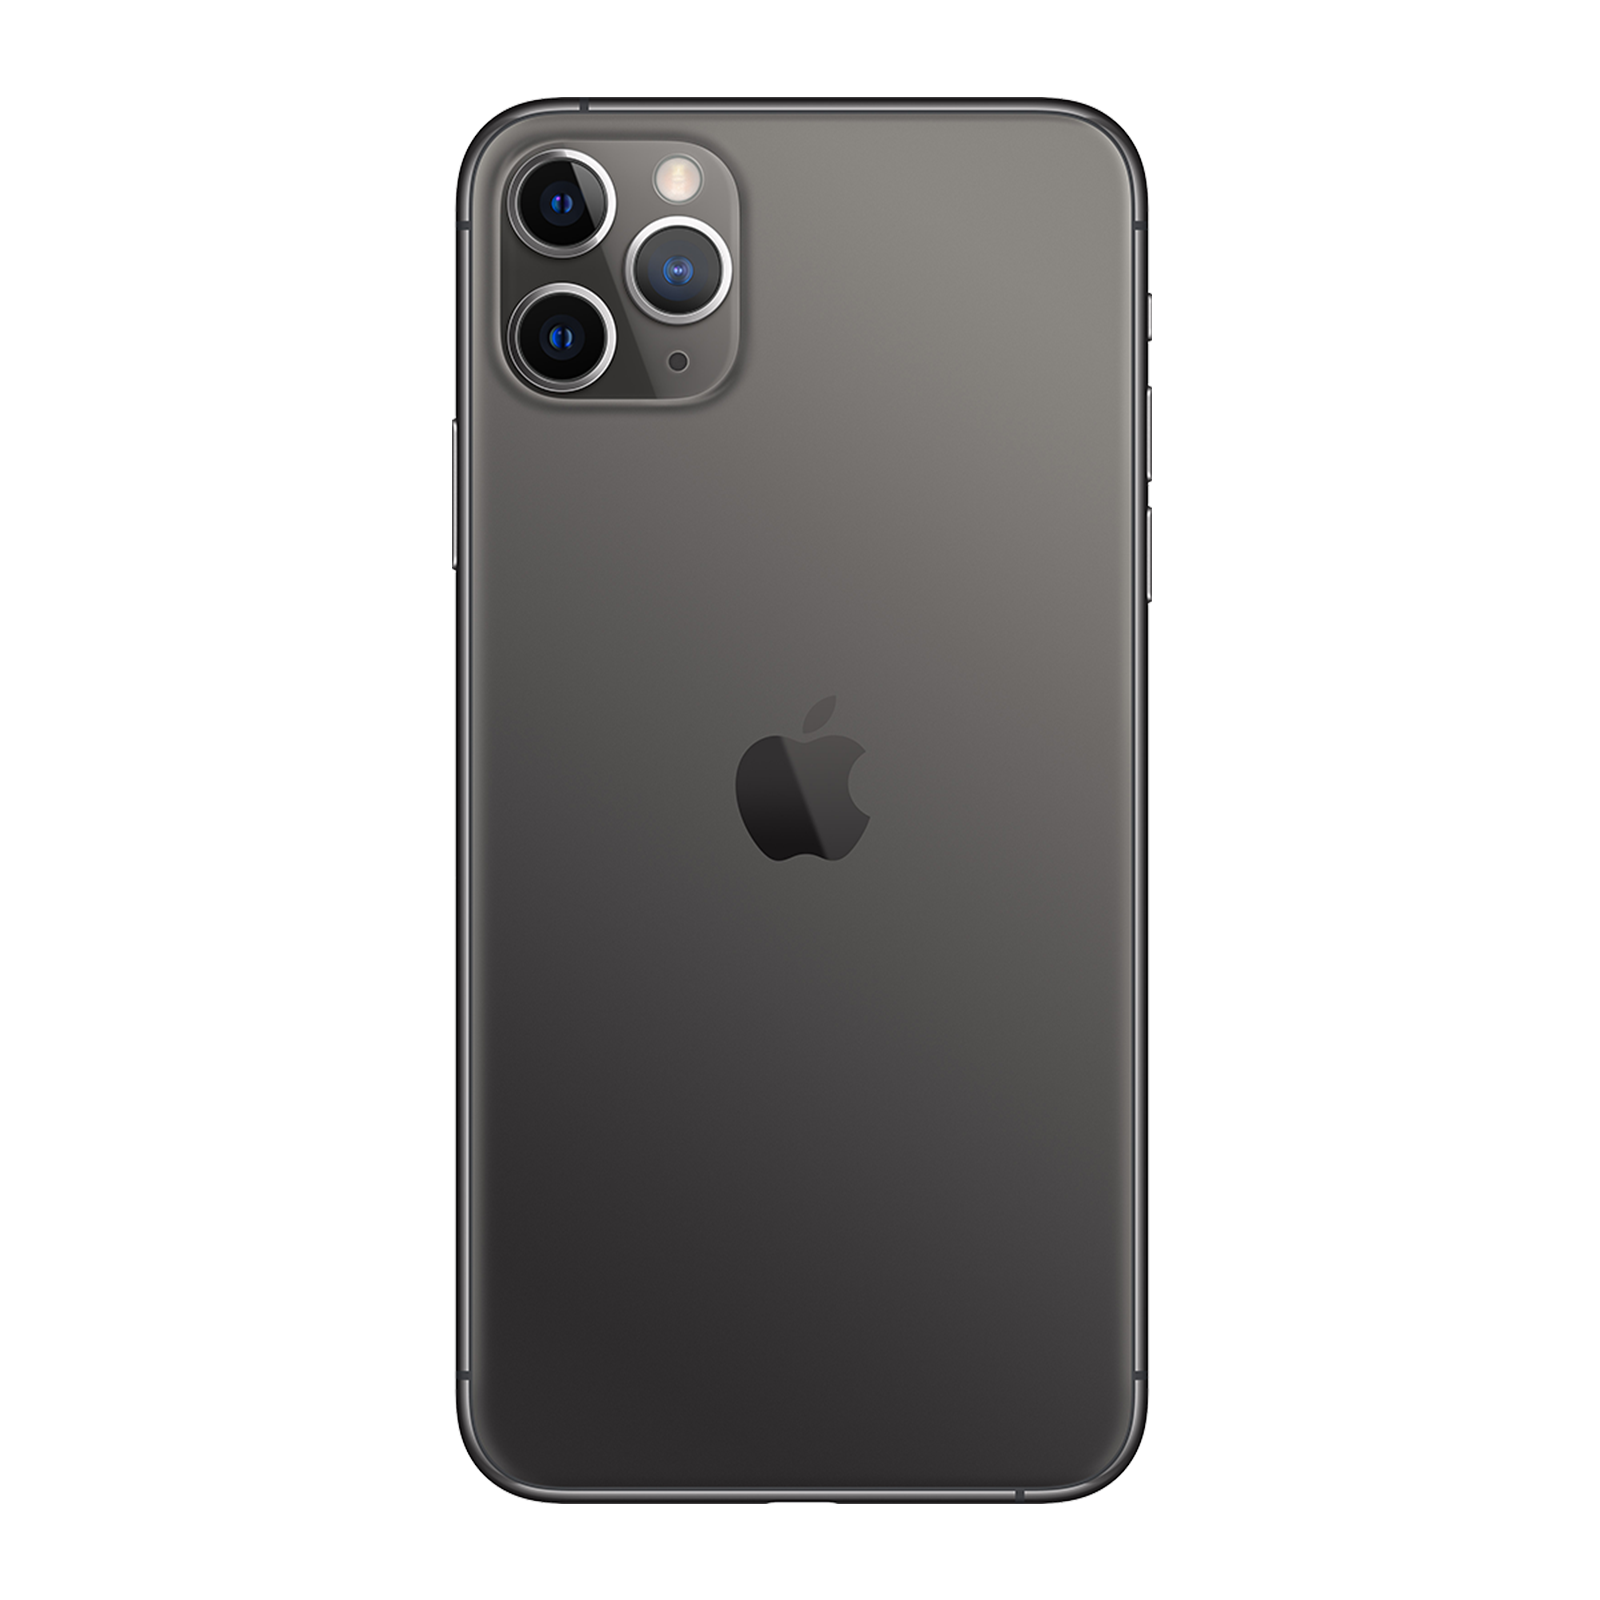 Apple iPhone 11 Pro Max 512GB Space Grey Fair - Unlocked